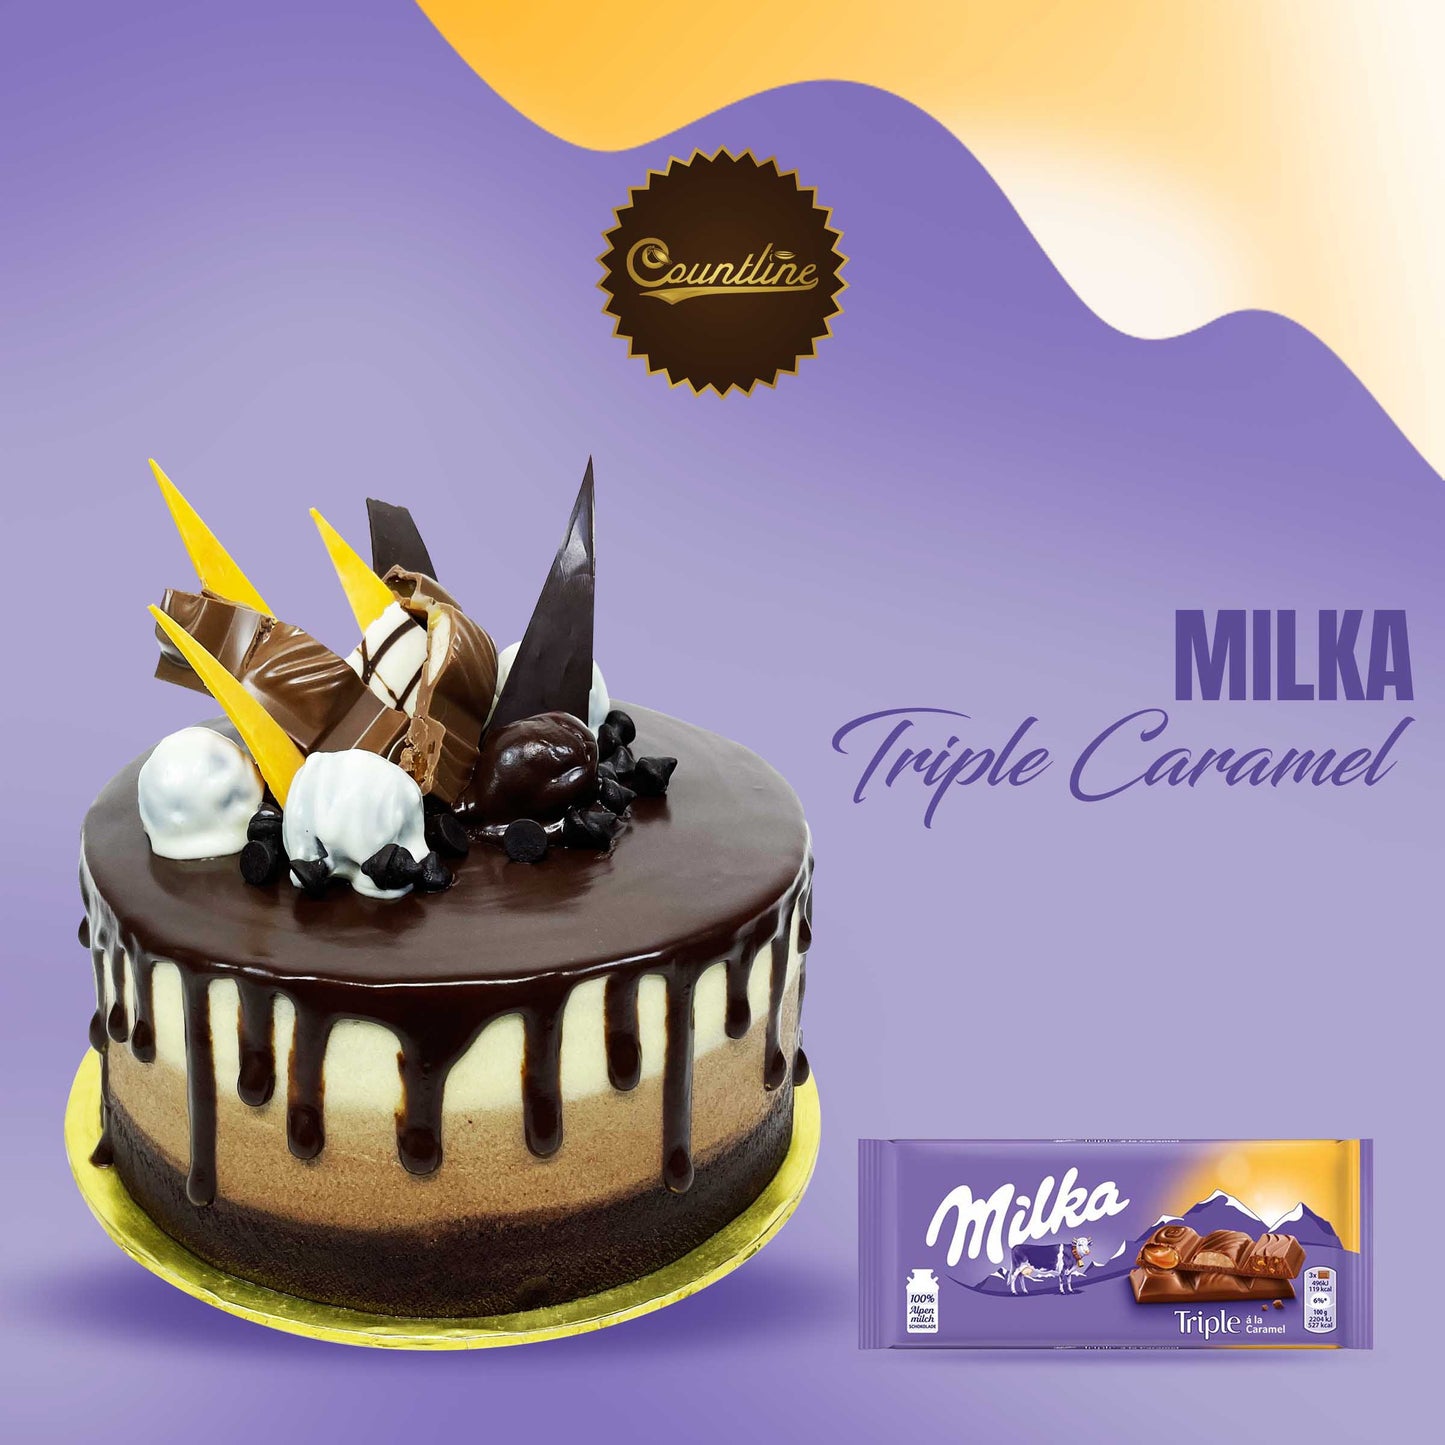 Milka triple caramel cake